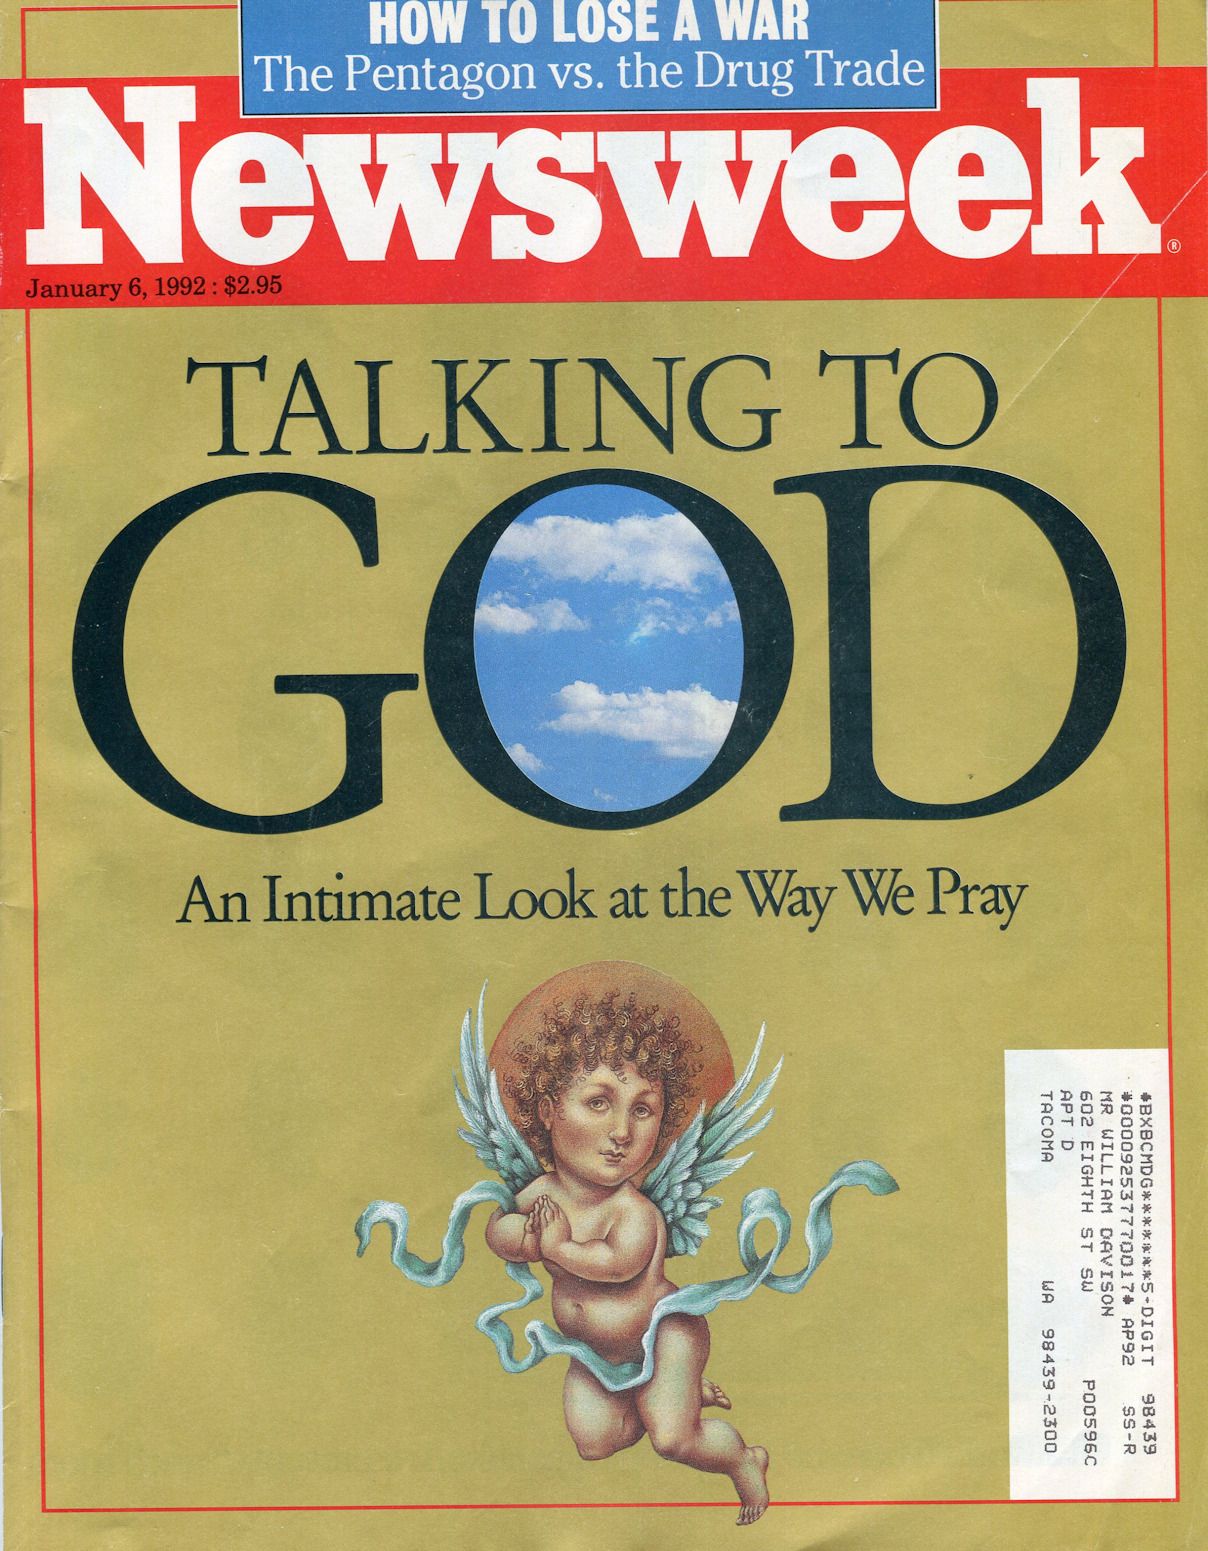 JANUARY 6 1992 - NEWSWEEK magazine - TALKING TO GOD